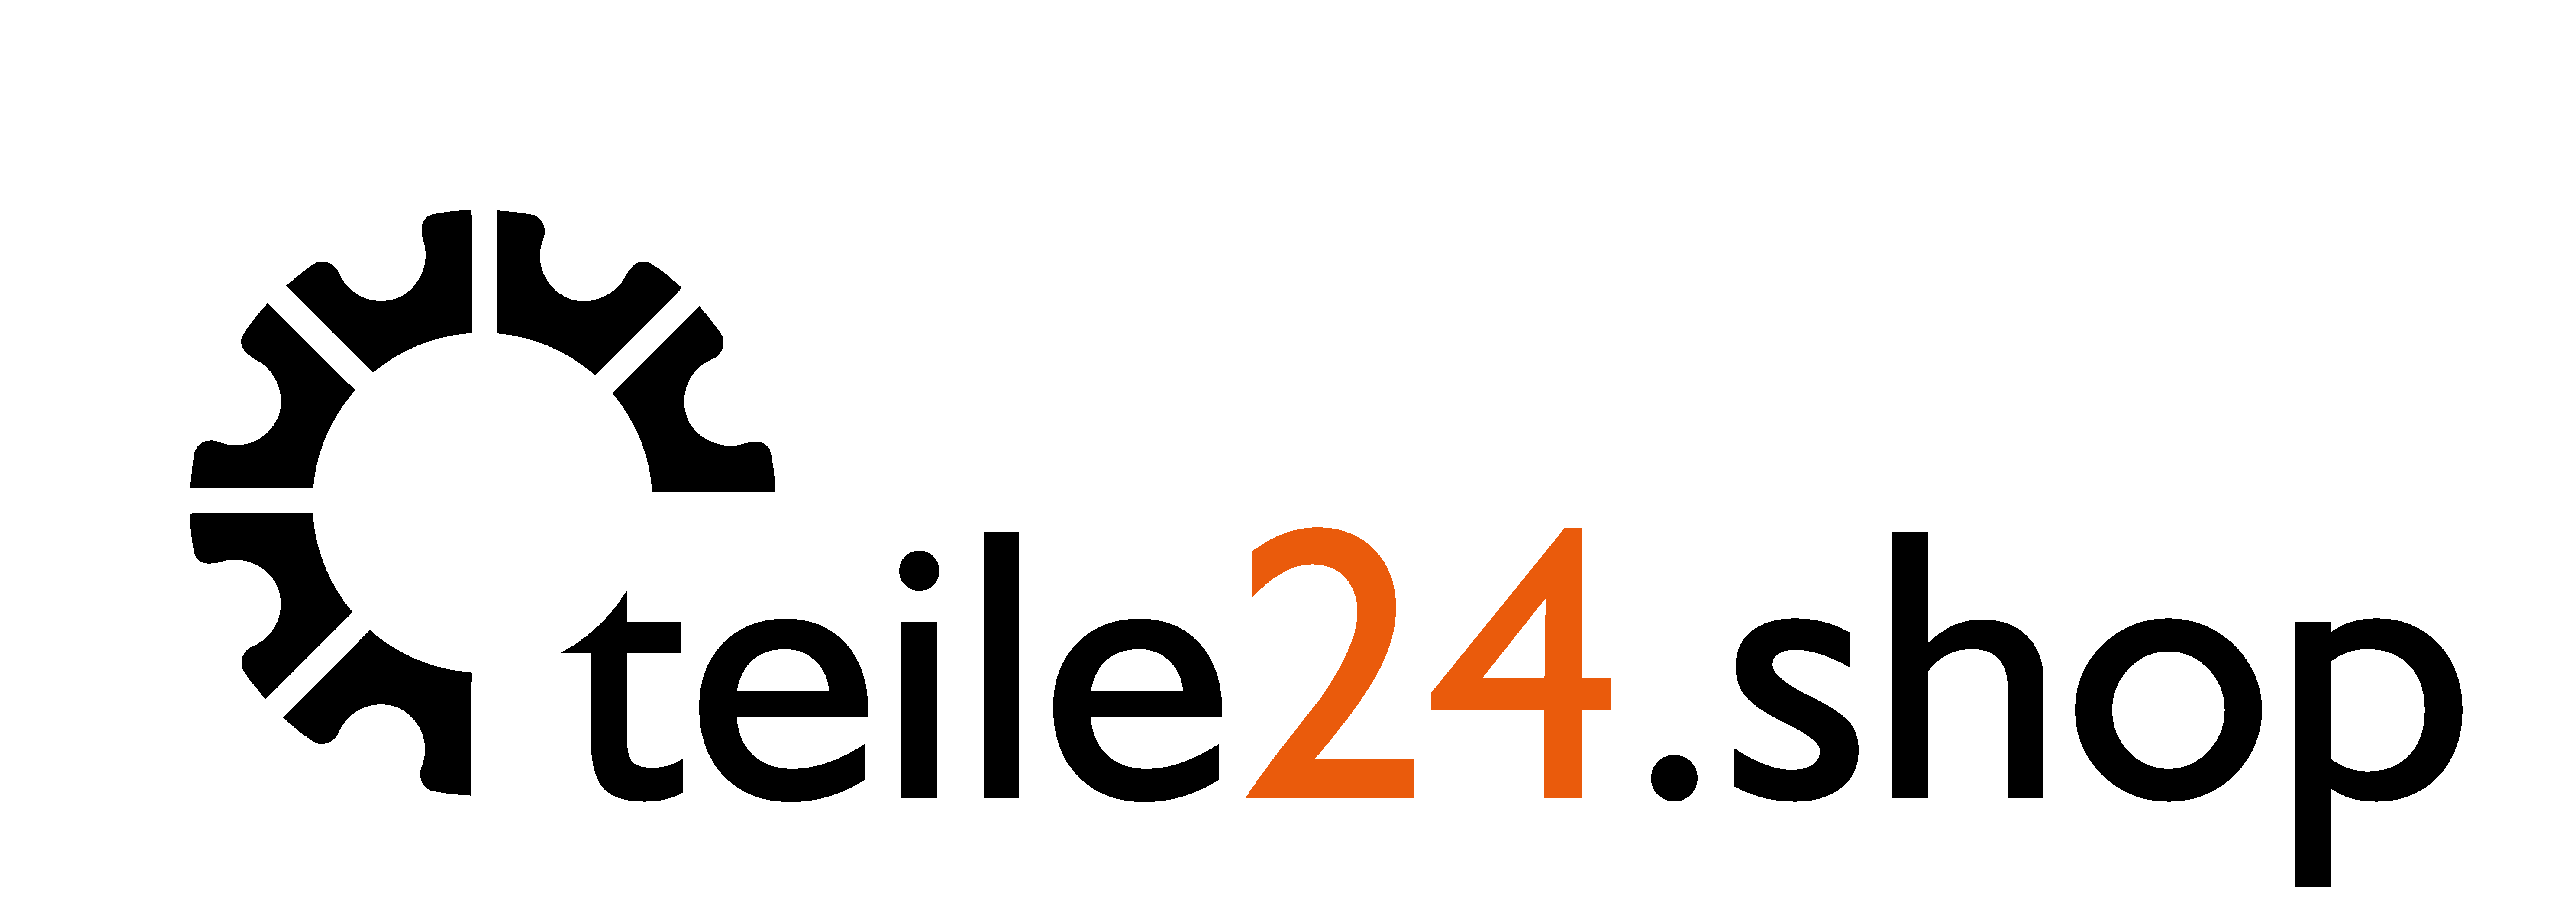 teile24.shop-Logo